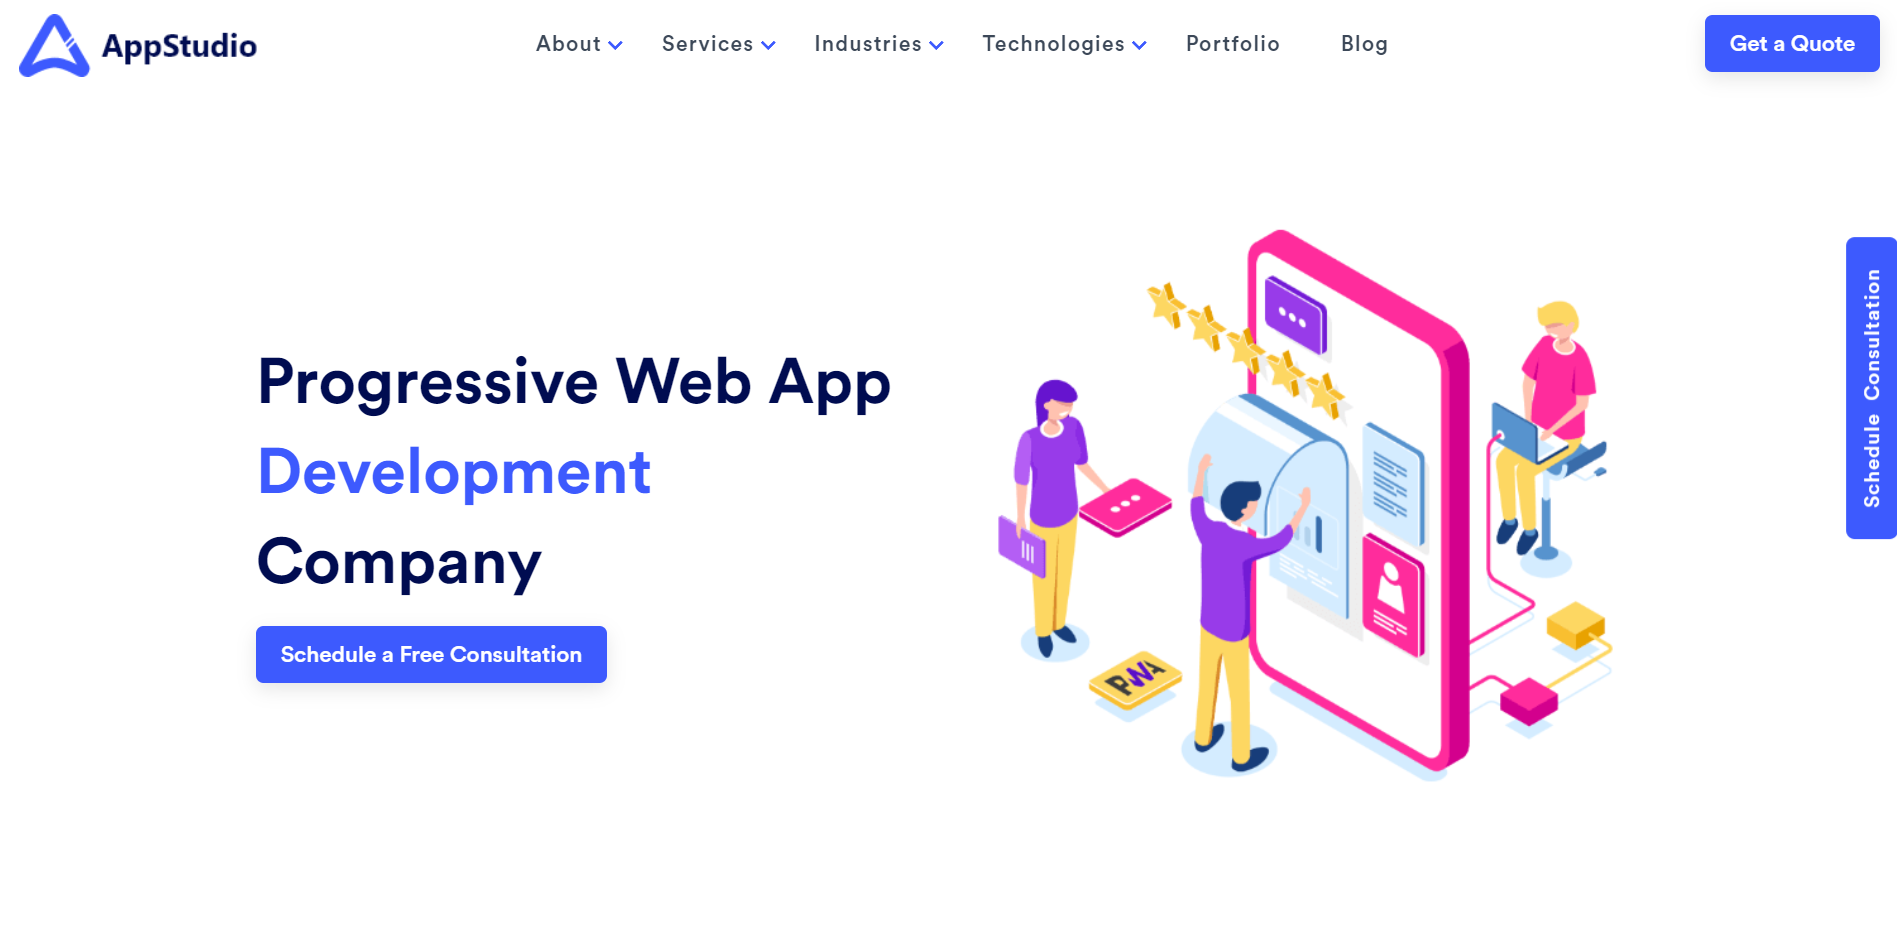 progressive web app development company canada: AppStudio